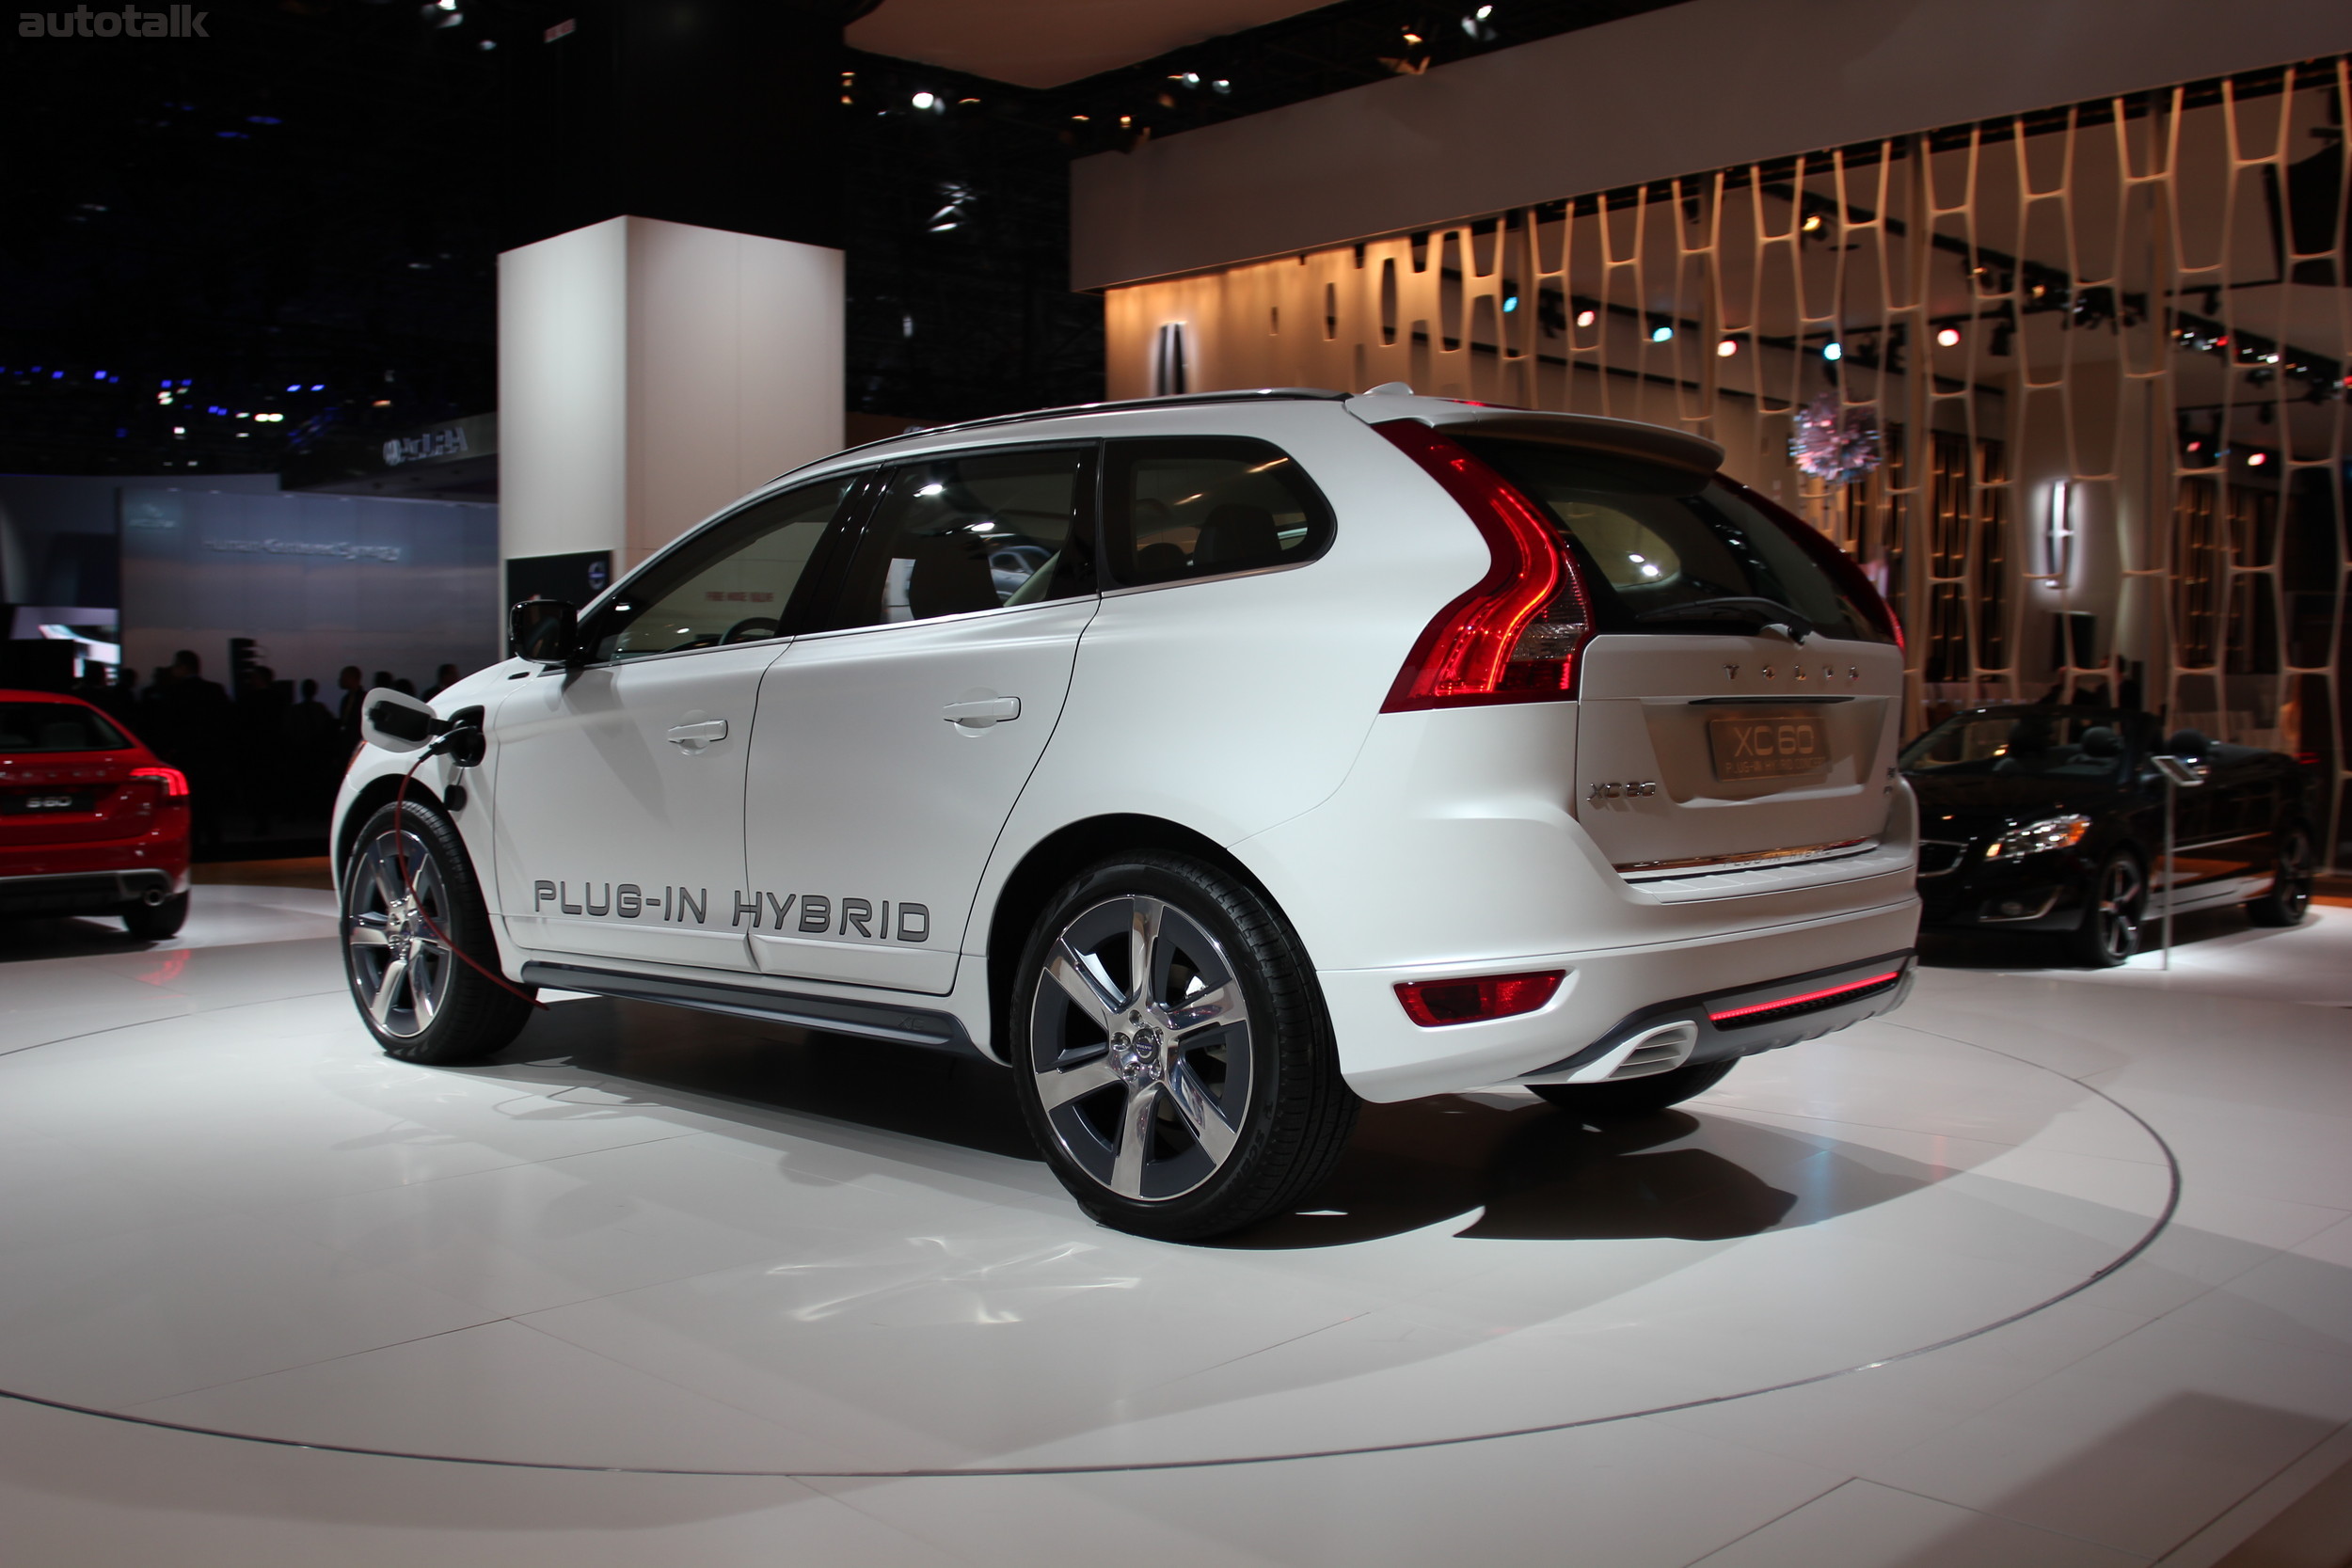 2012 New York International Auto Show Volvo Booth